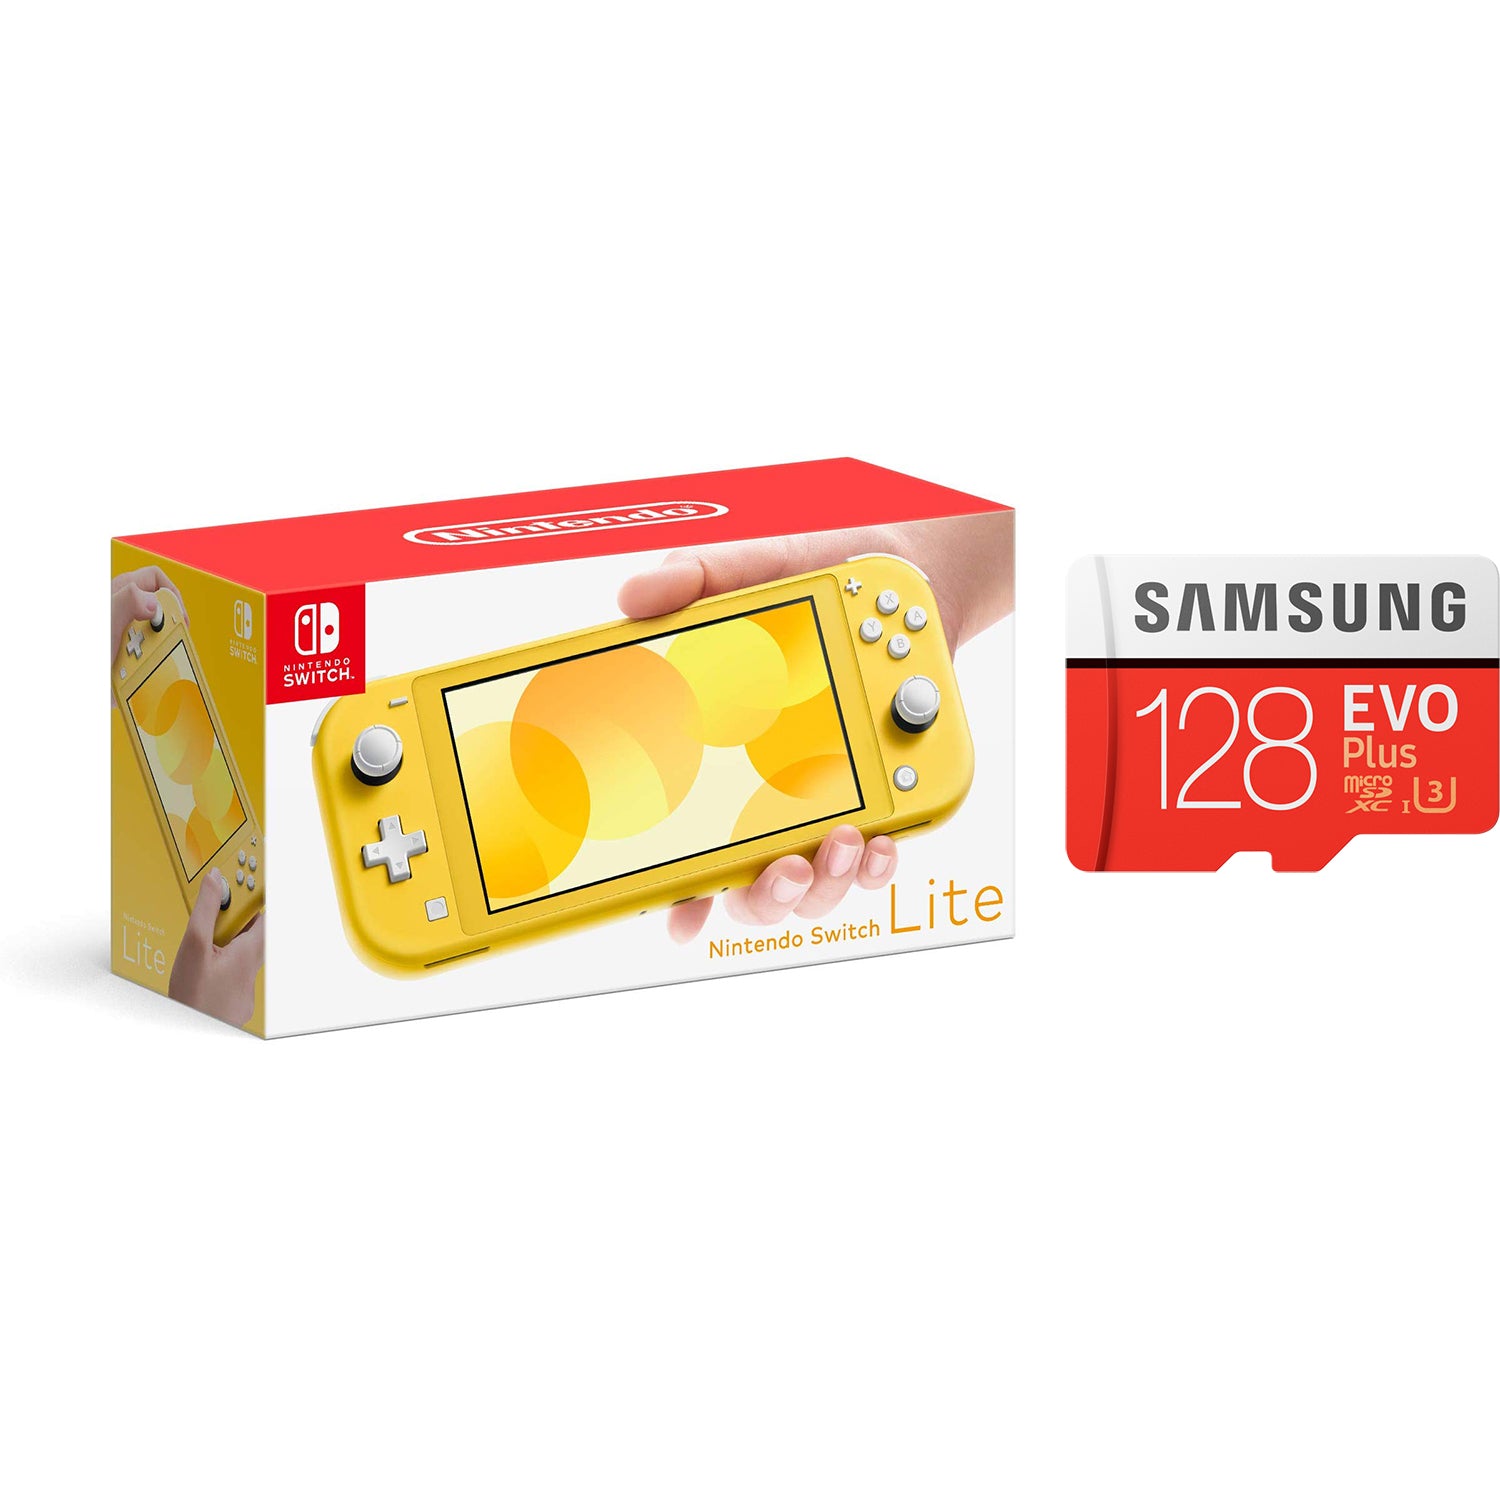 Nintendo Switch Lite 32GB Yellow with Samsung 128GB Micro SD Card Bundle - Pro-Distributing